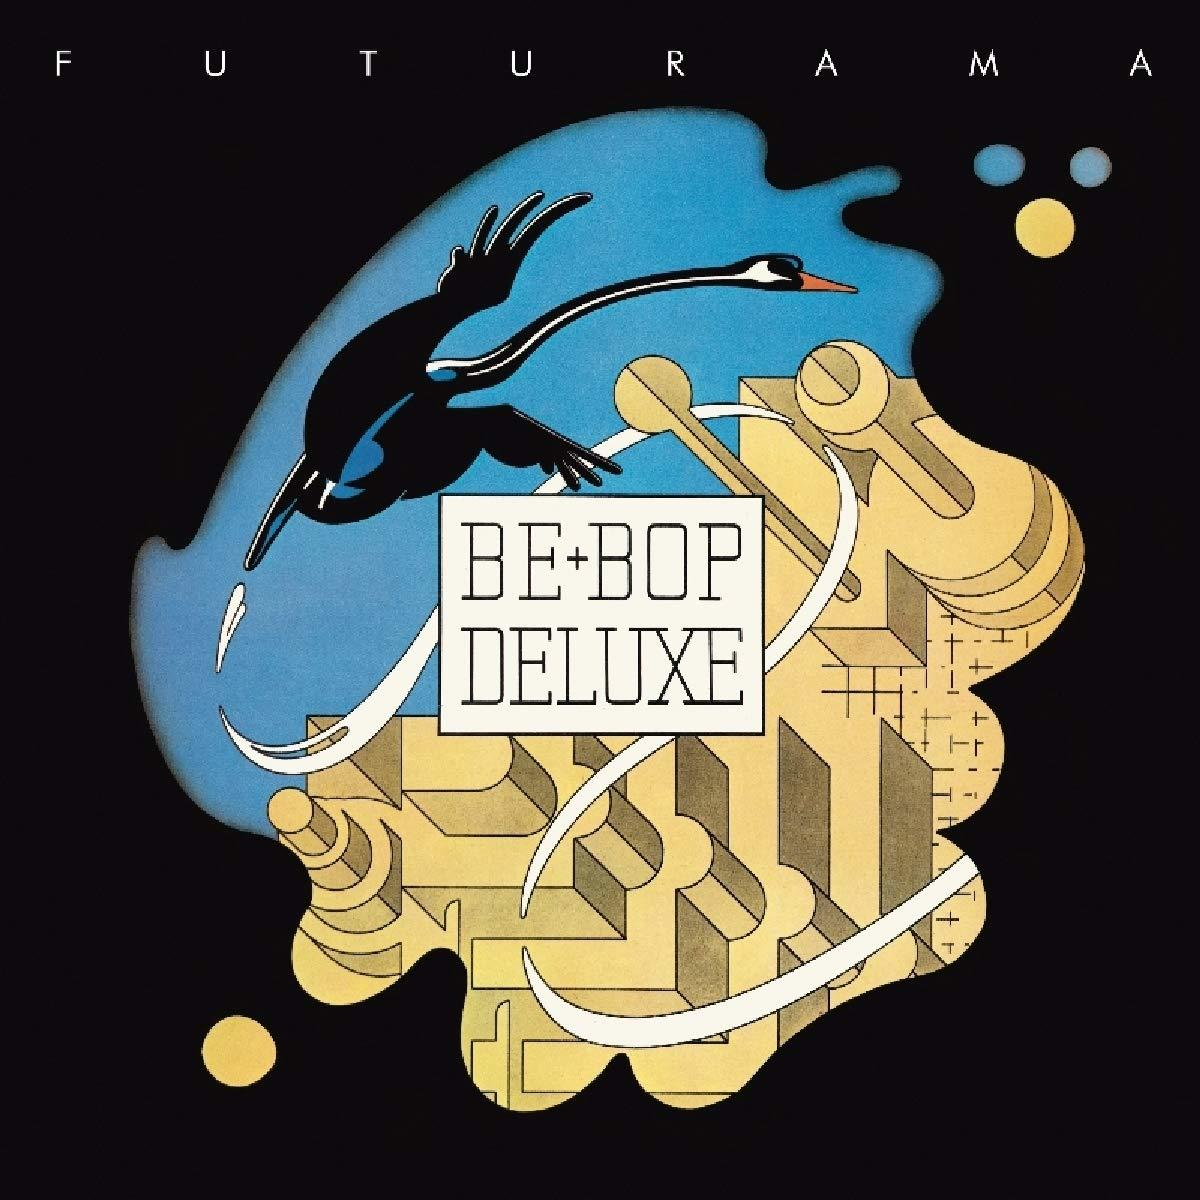 Be-Bop Deluxe DVD 3CD/DVD) (CD - Audio) Futurama + (lim 